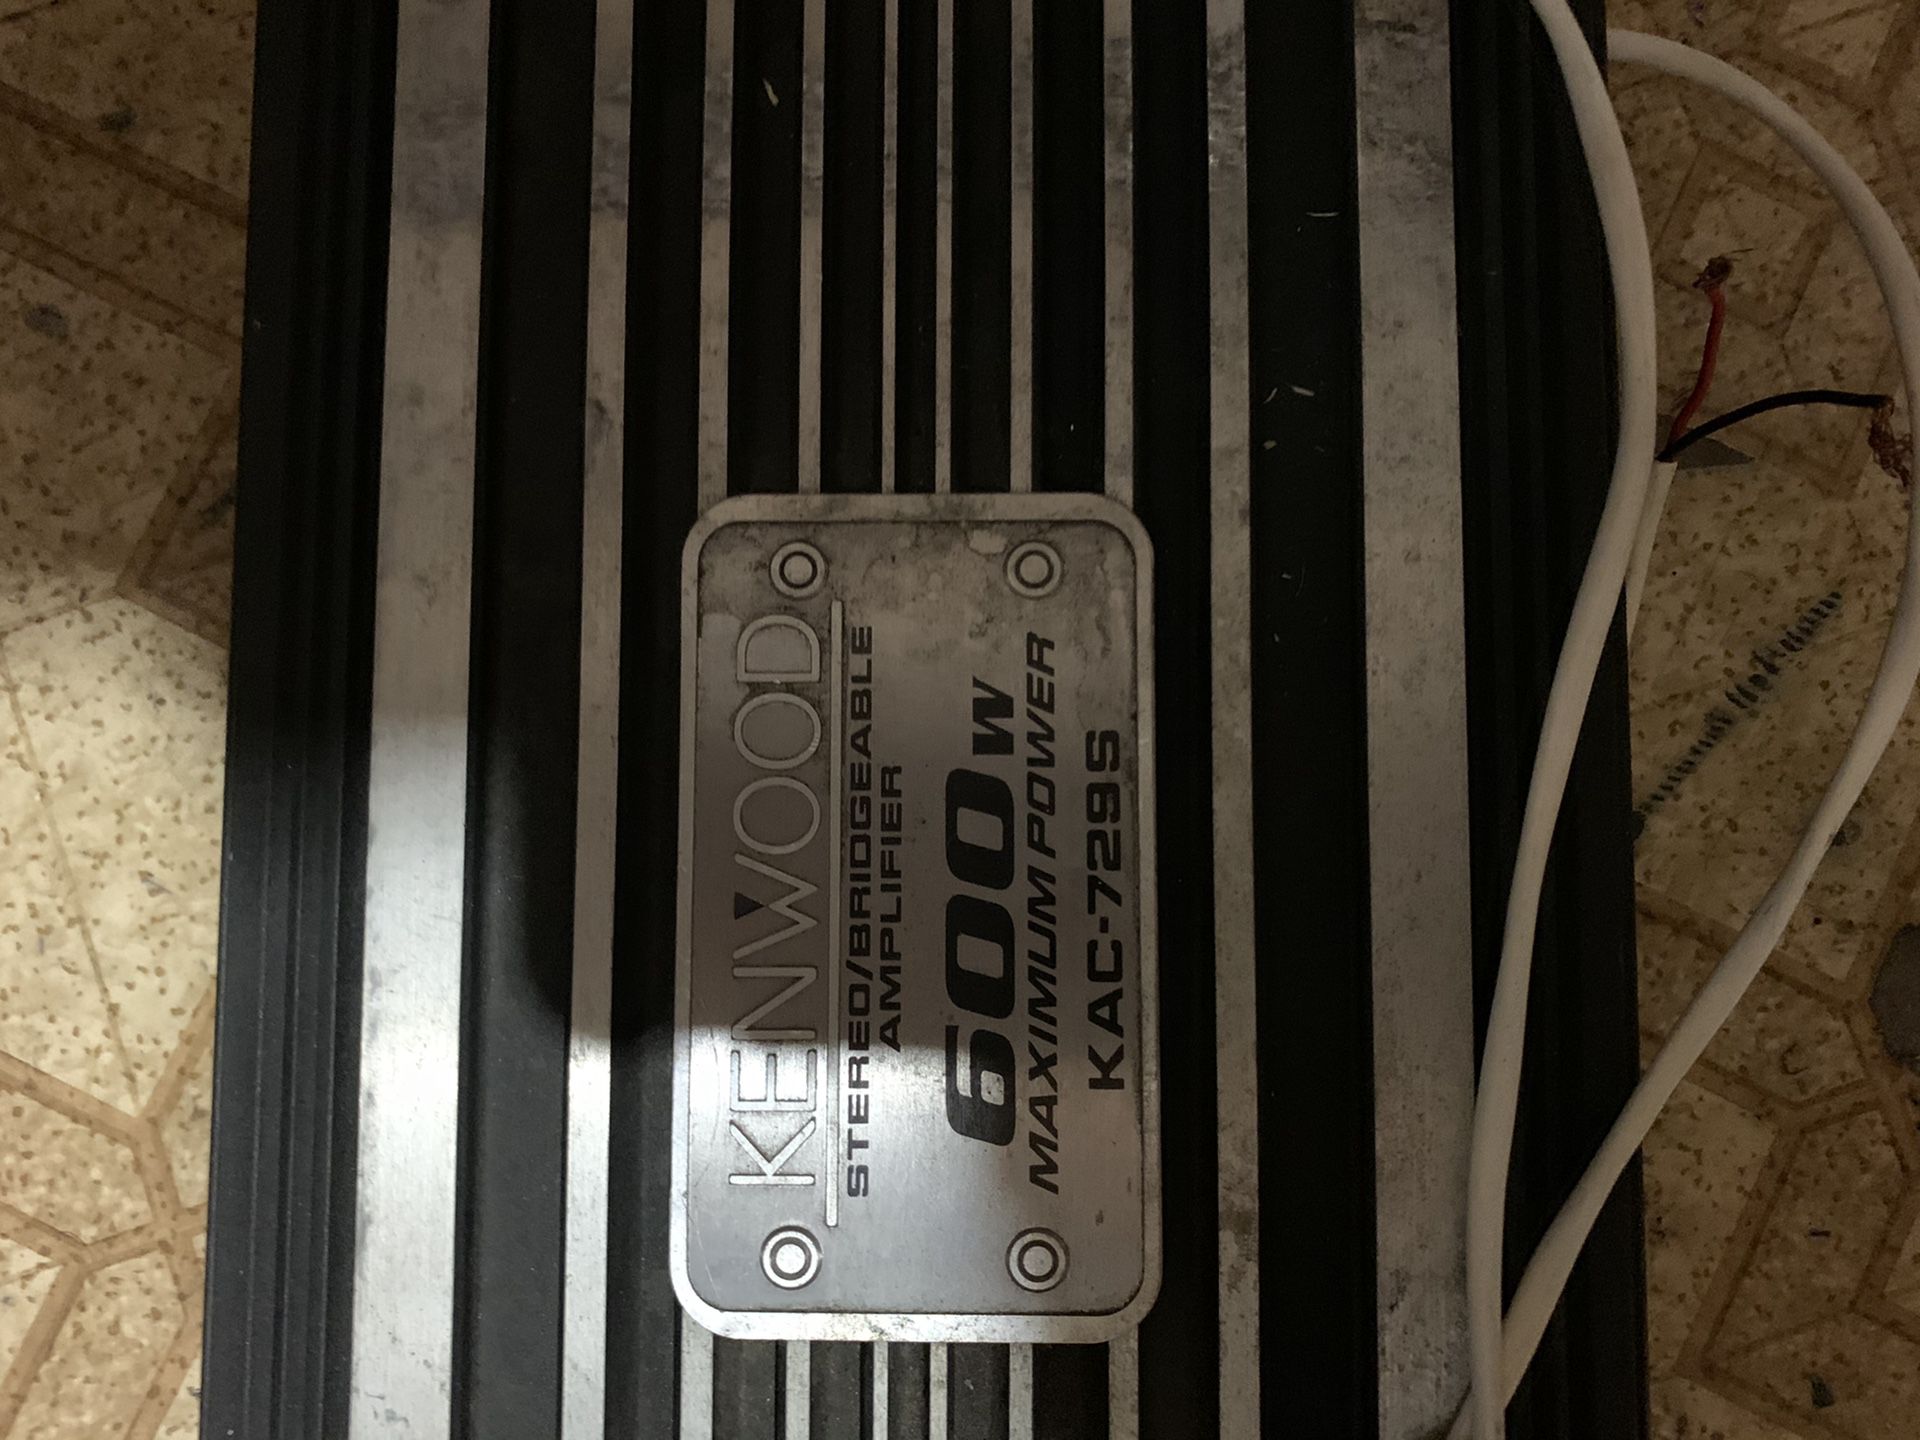 Kenwood Amplifiers